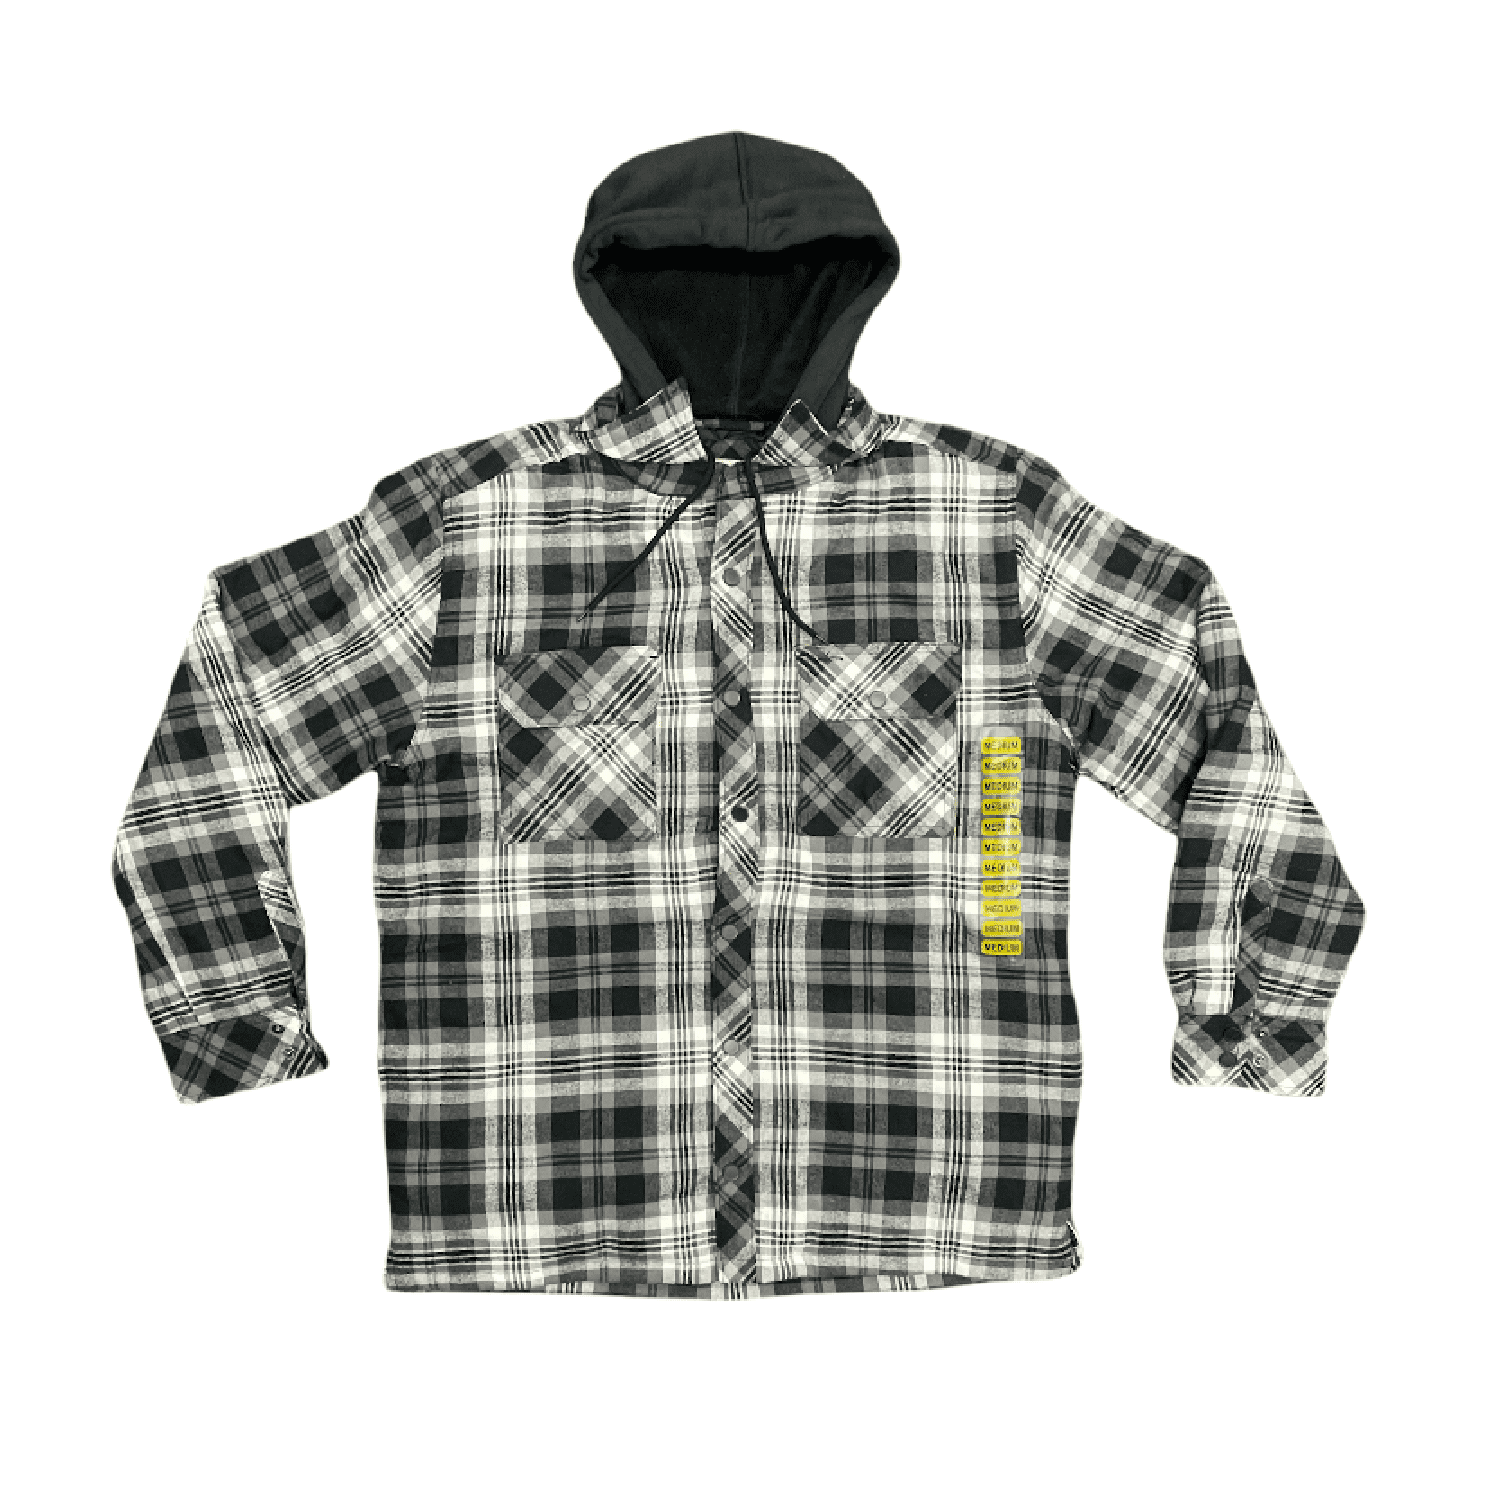 Boston Traders Men's Quilted Hooded Flannel Zip Up Shirt Jacket (Black, L)  - Walmart.com